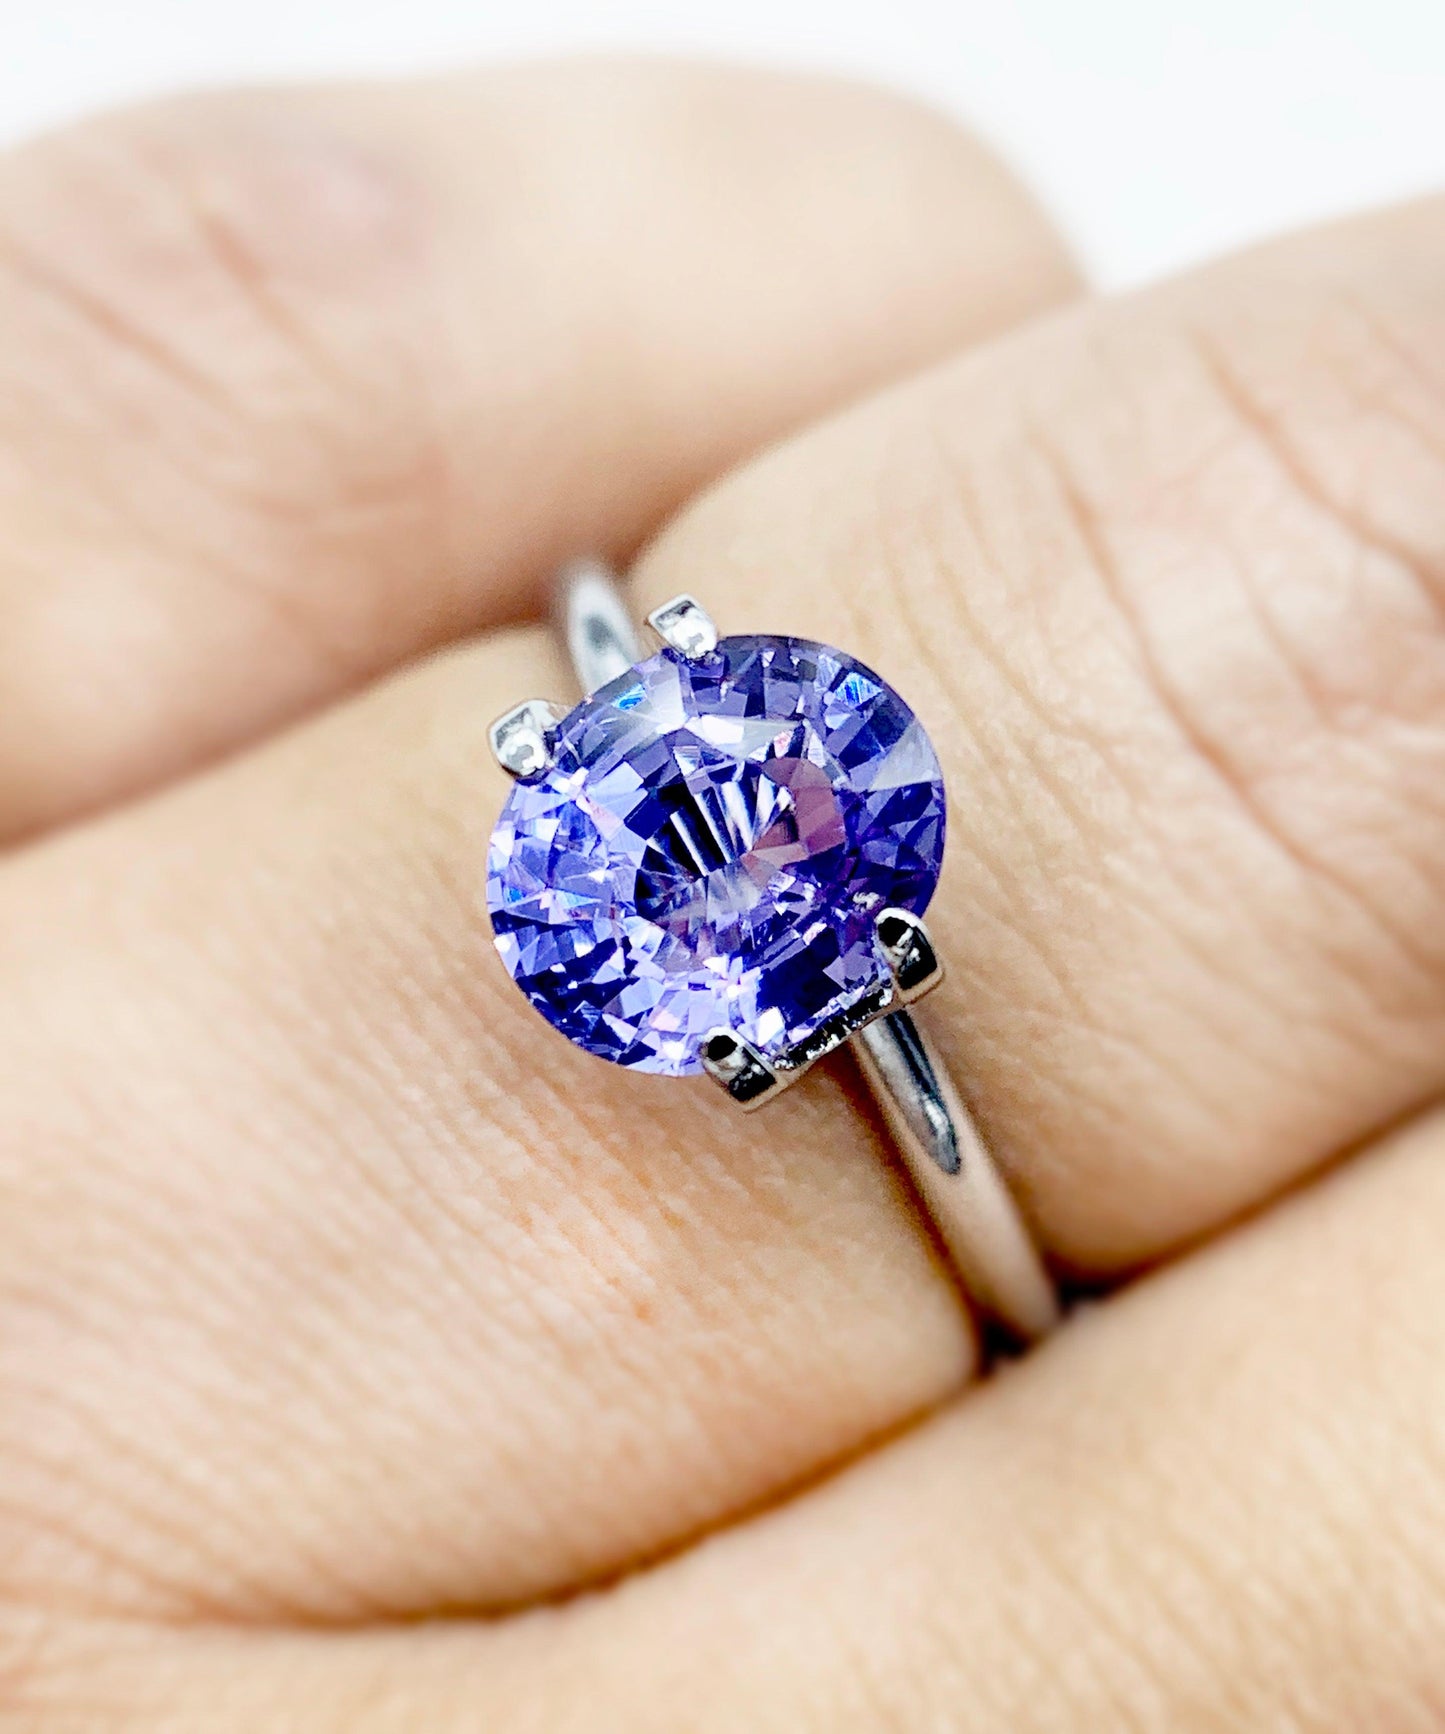 2.01 carat Blue Sapphire. for engagement rings, custom jewelry, loose gemstone